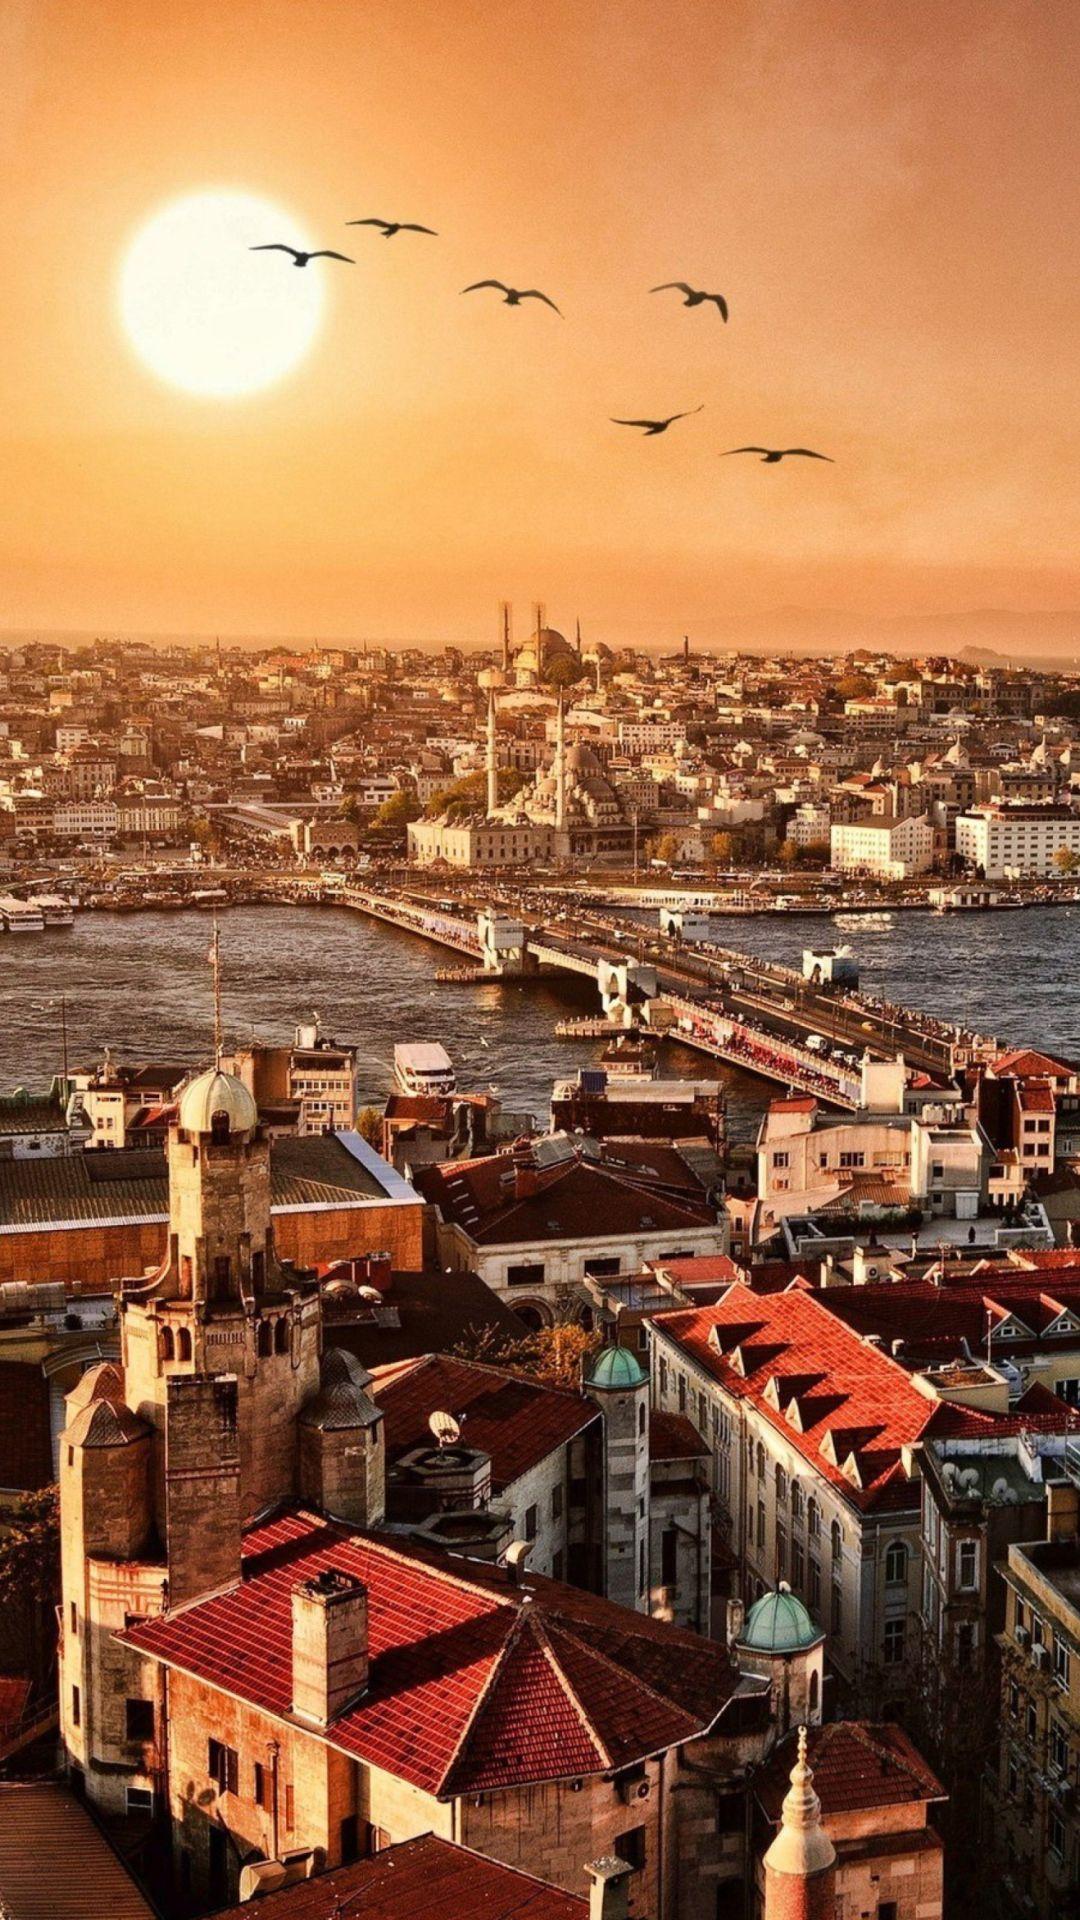 Istanbul Wallpaper for iPhone iPhone 7 plus, iPhone 6 plus